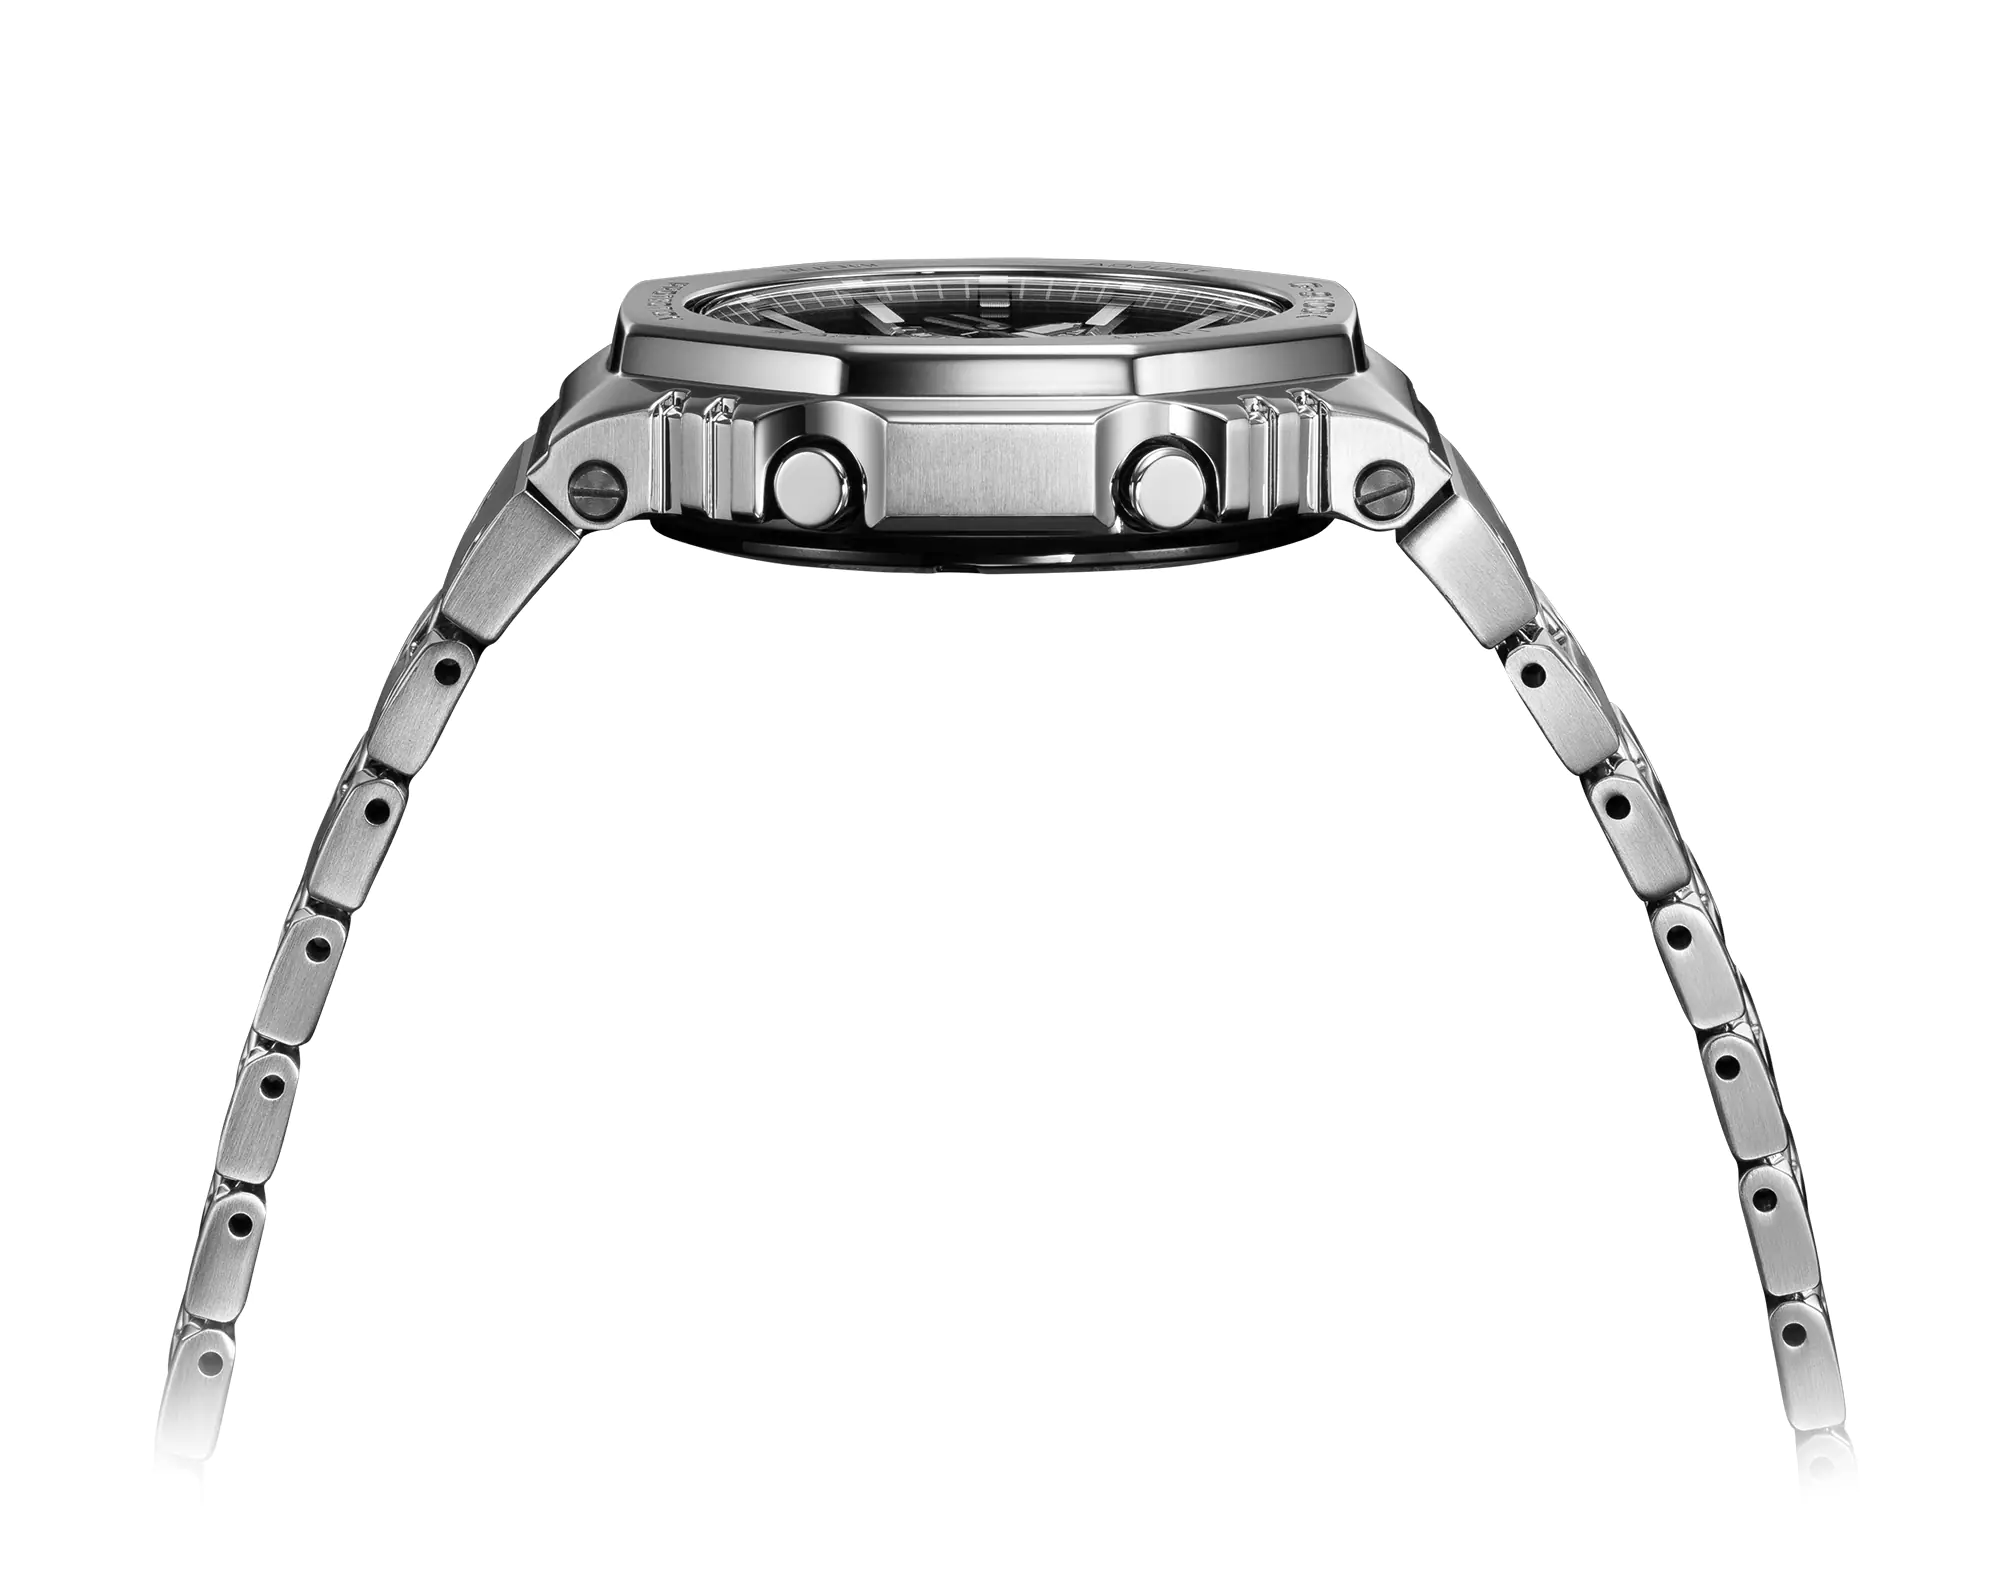 G-Shock Analog-Digital Full Metal Silver Men's Watch GMB2100D-1A